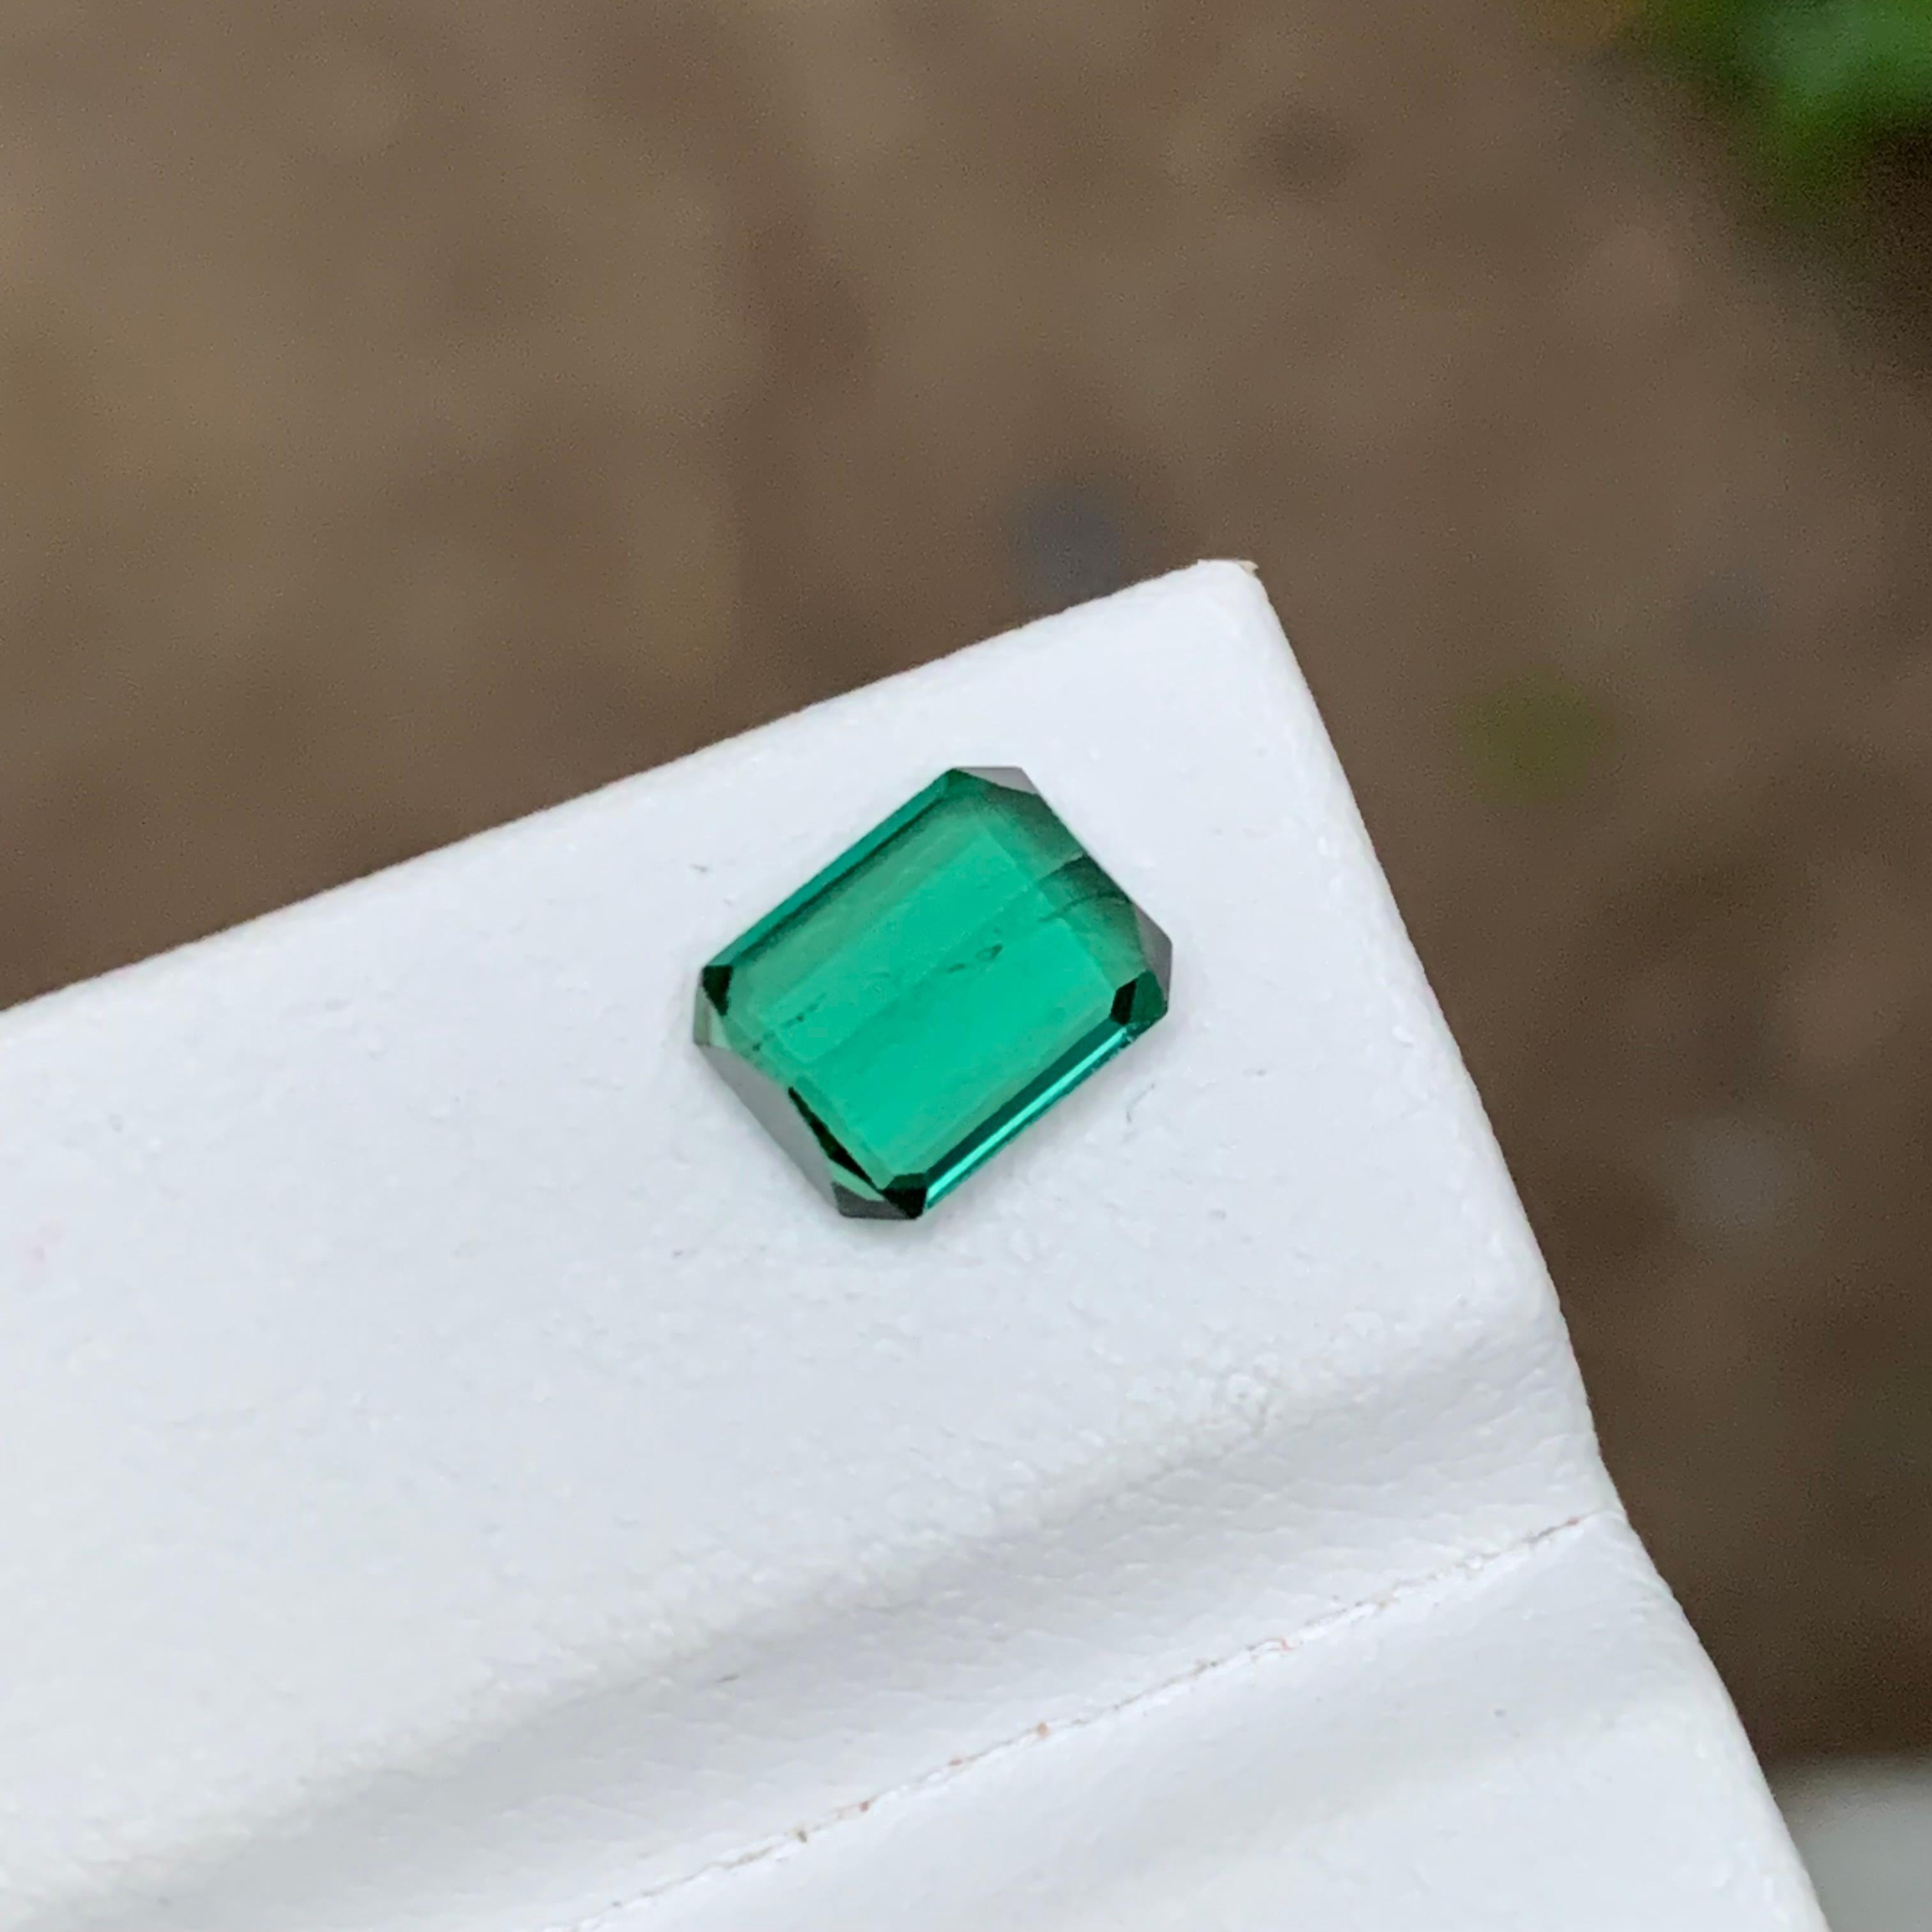 Rare Vibrant Bluish Neon Green Tourmaline Gemstone, 1.35 Ct Emerald Cut for Ring For Sale 2